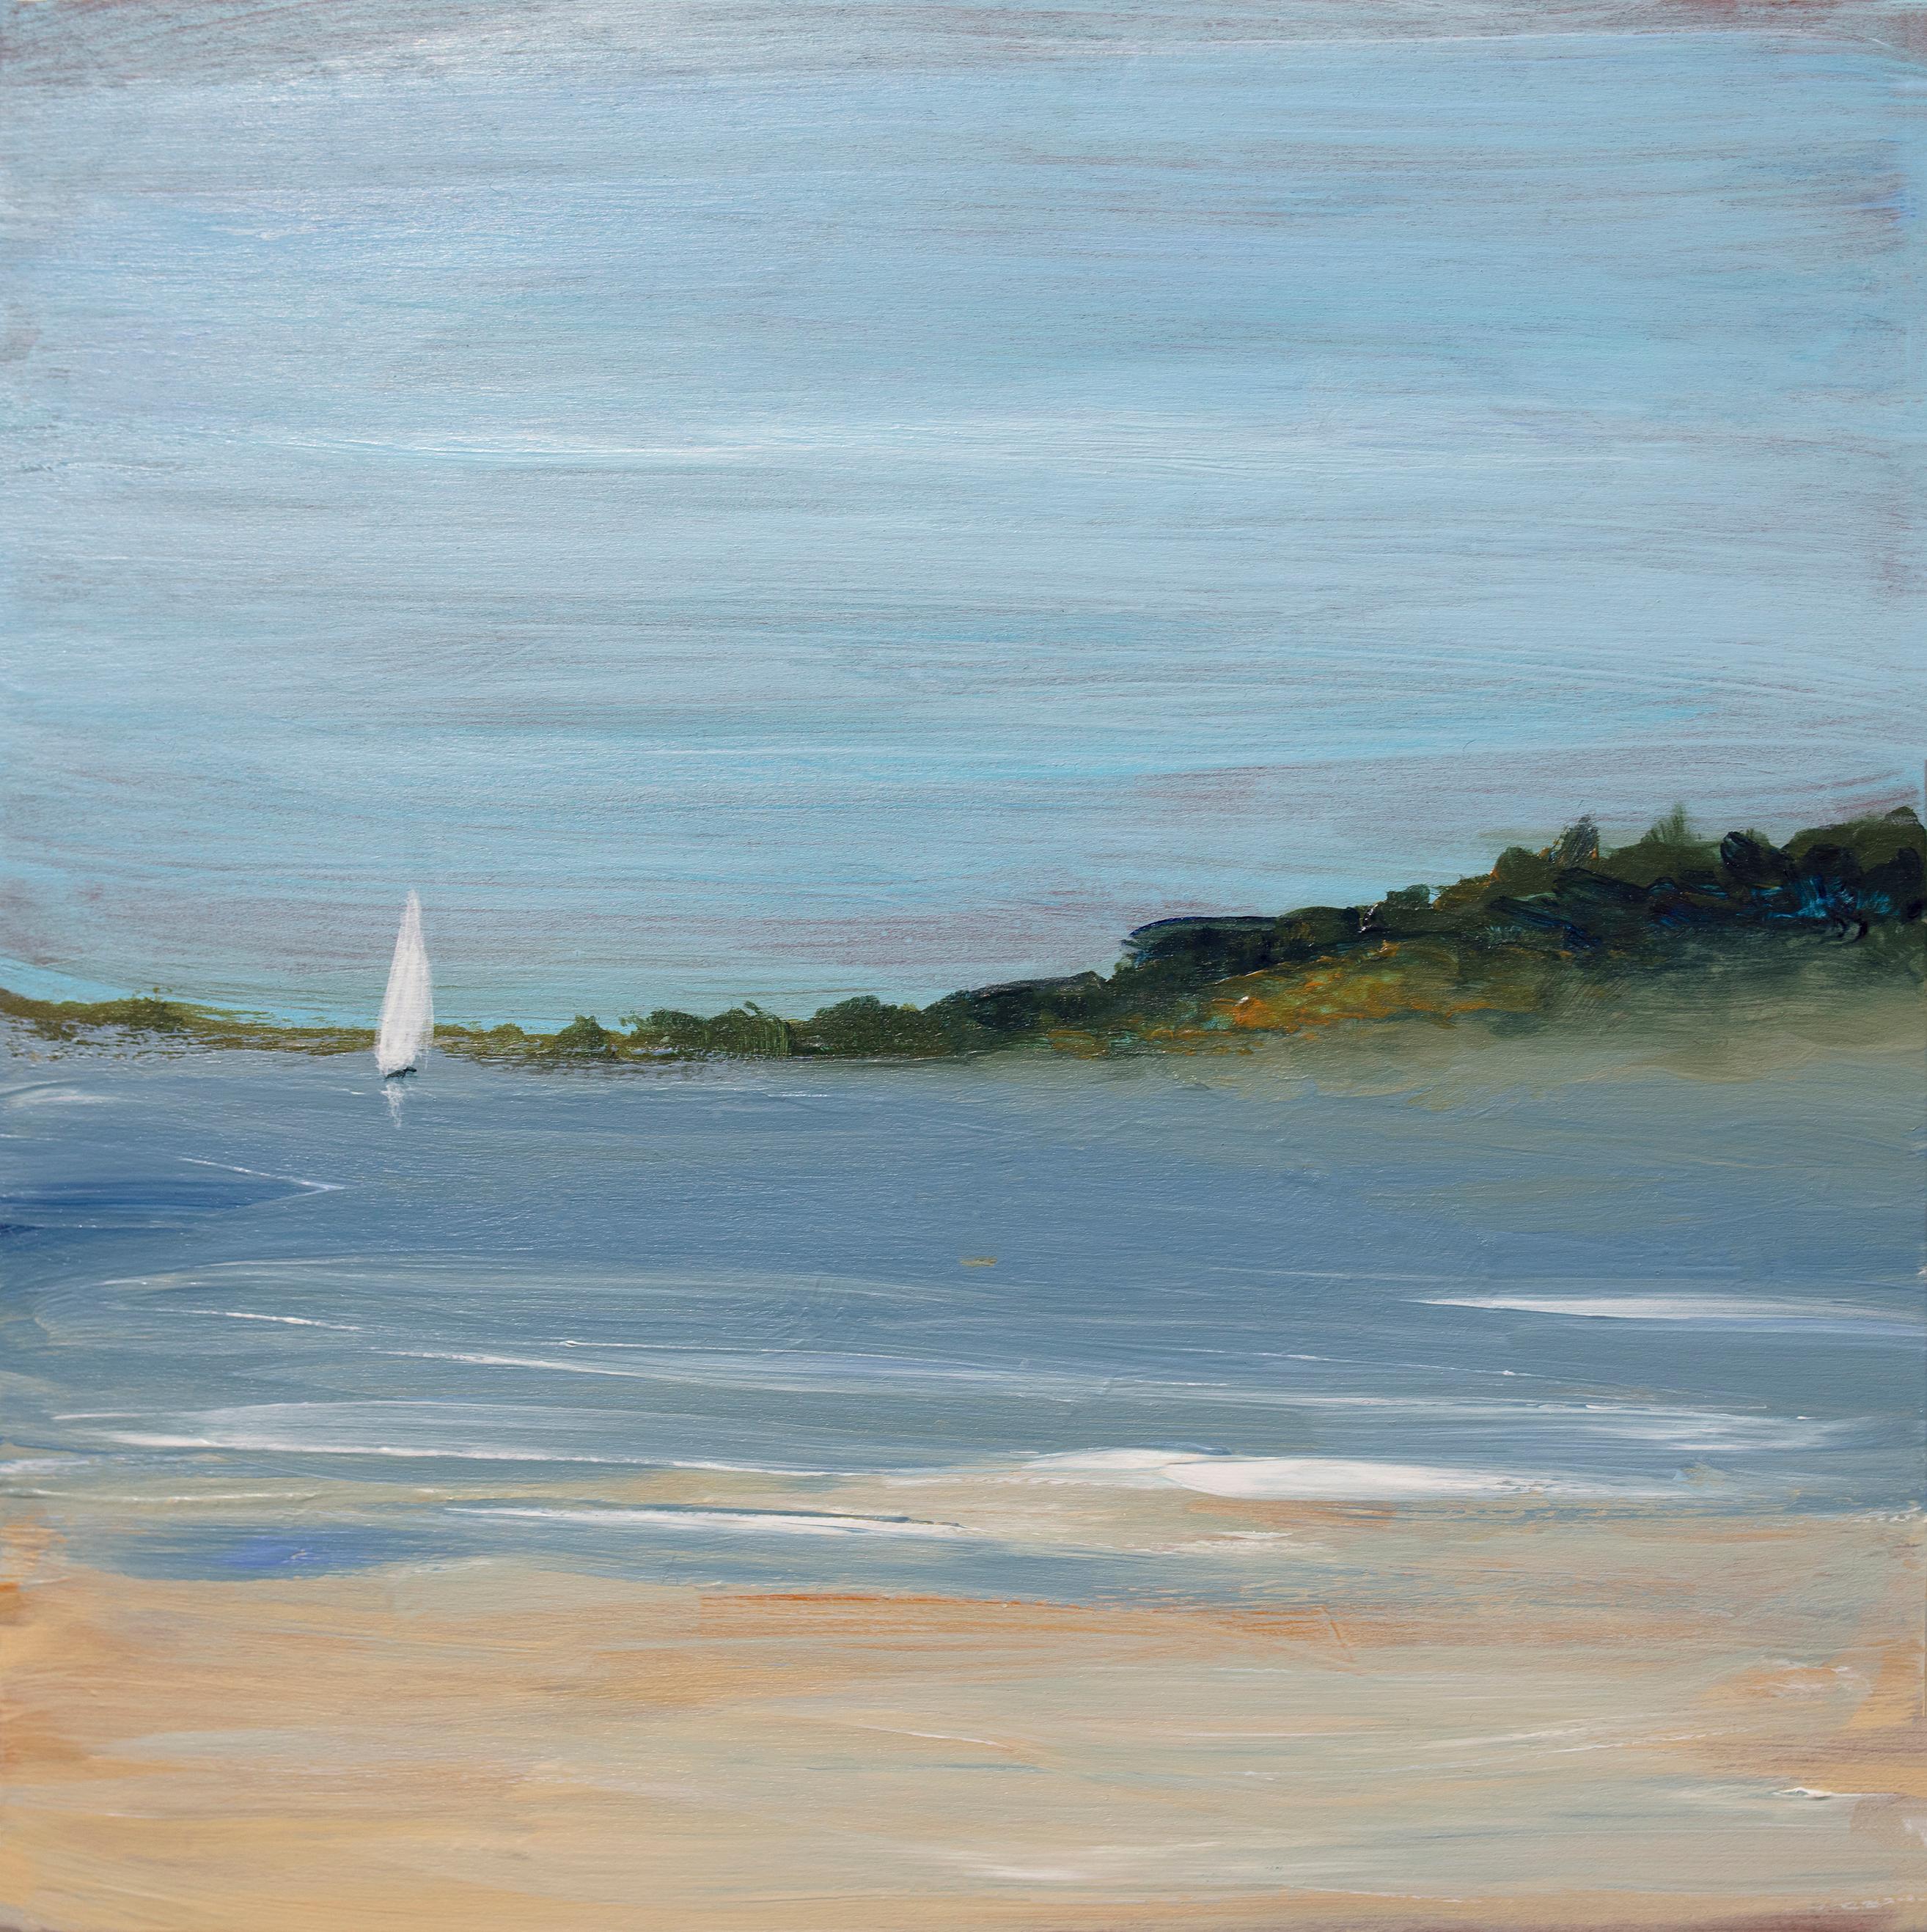 S. Cora Aldo Landscape Painting - "Saturday Sail", Small Seascape Painting